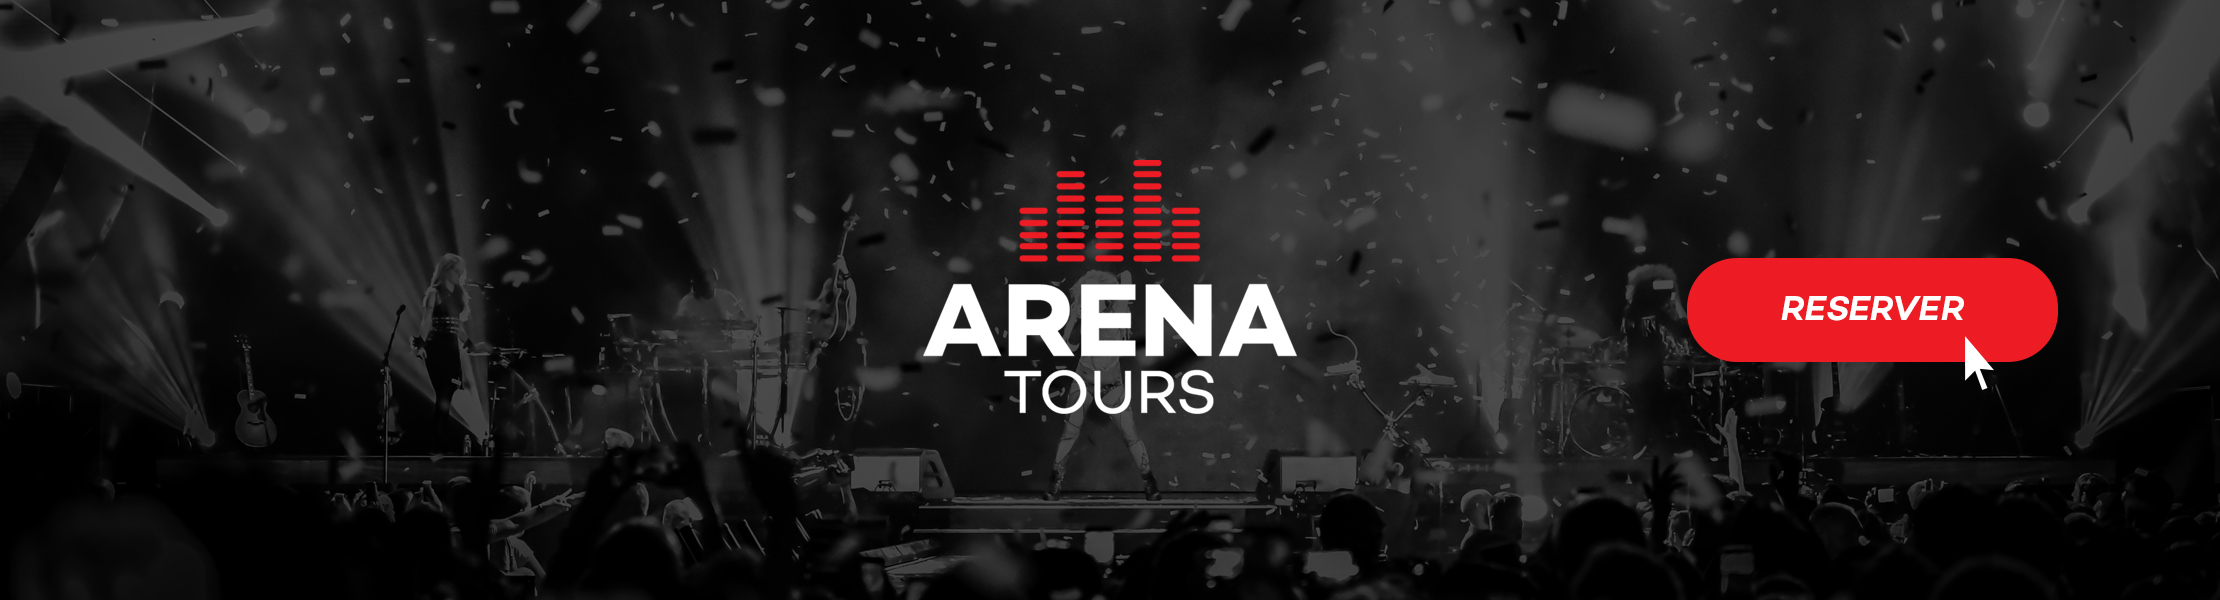 arena tours reviews